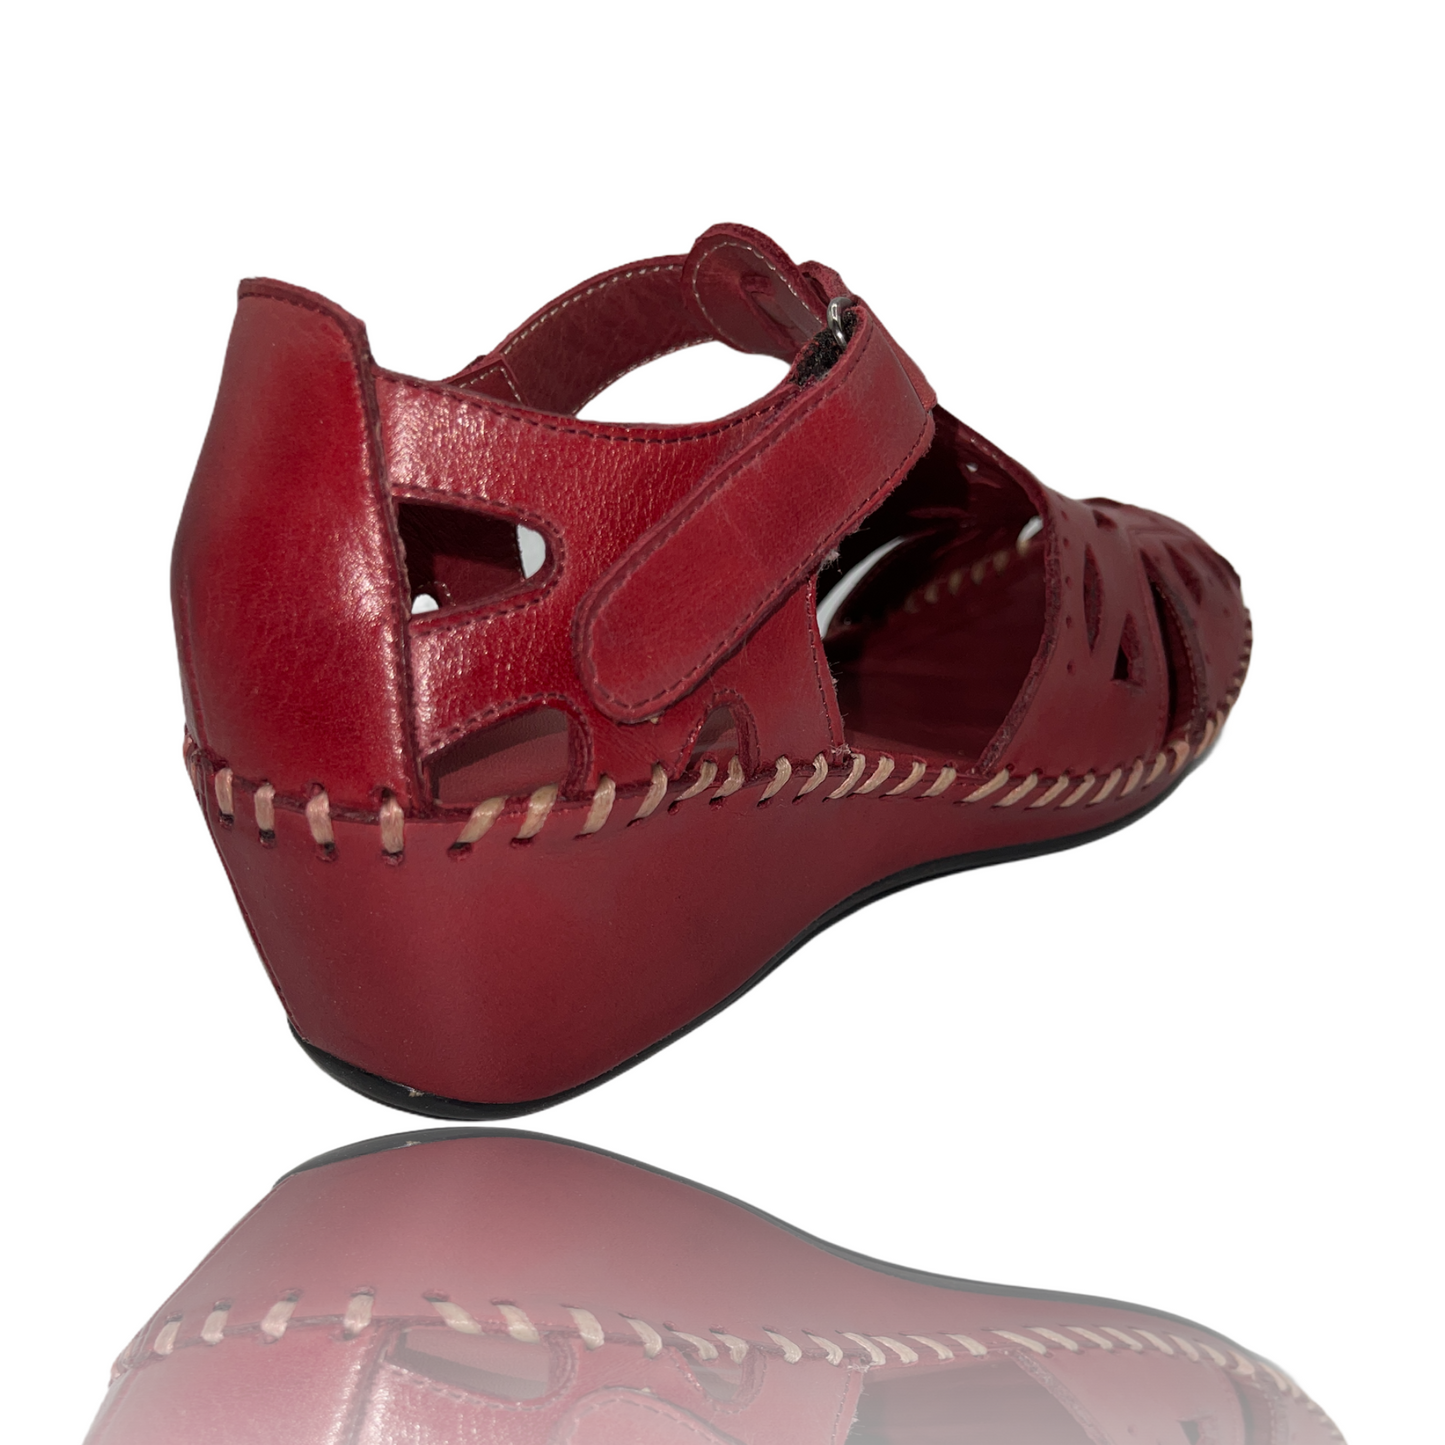 The Tonmawr Burgundy Leather Sandal Final Sale!